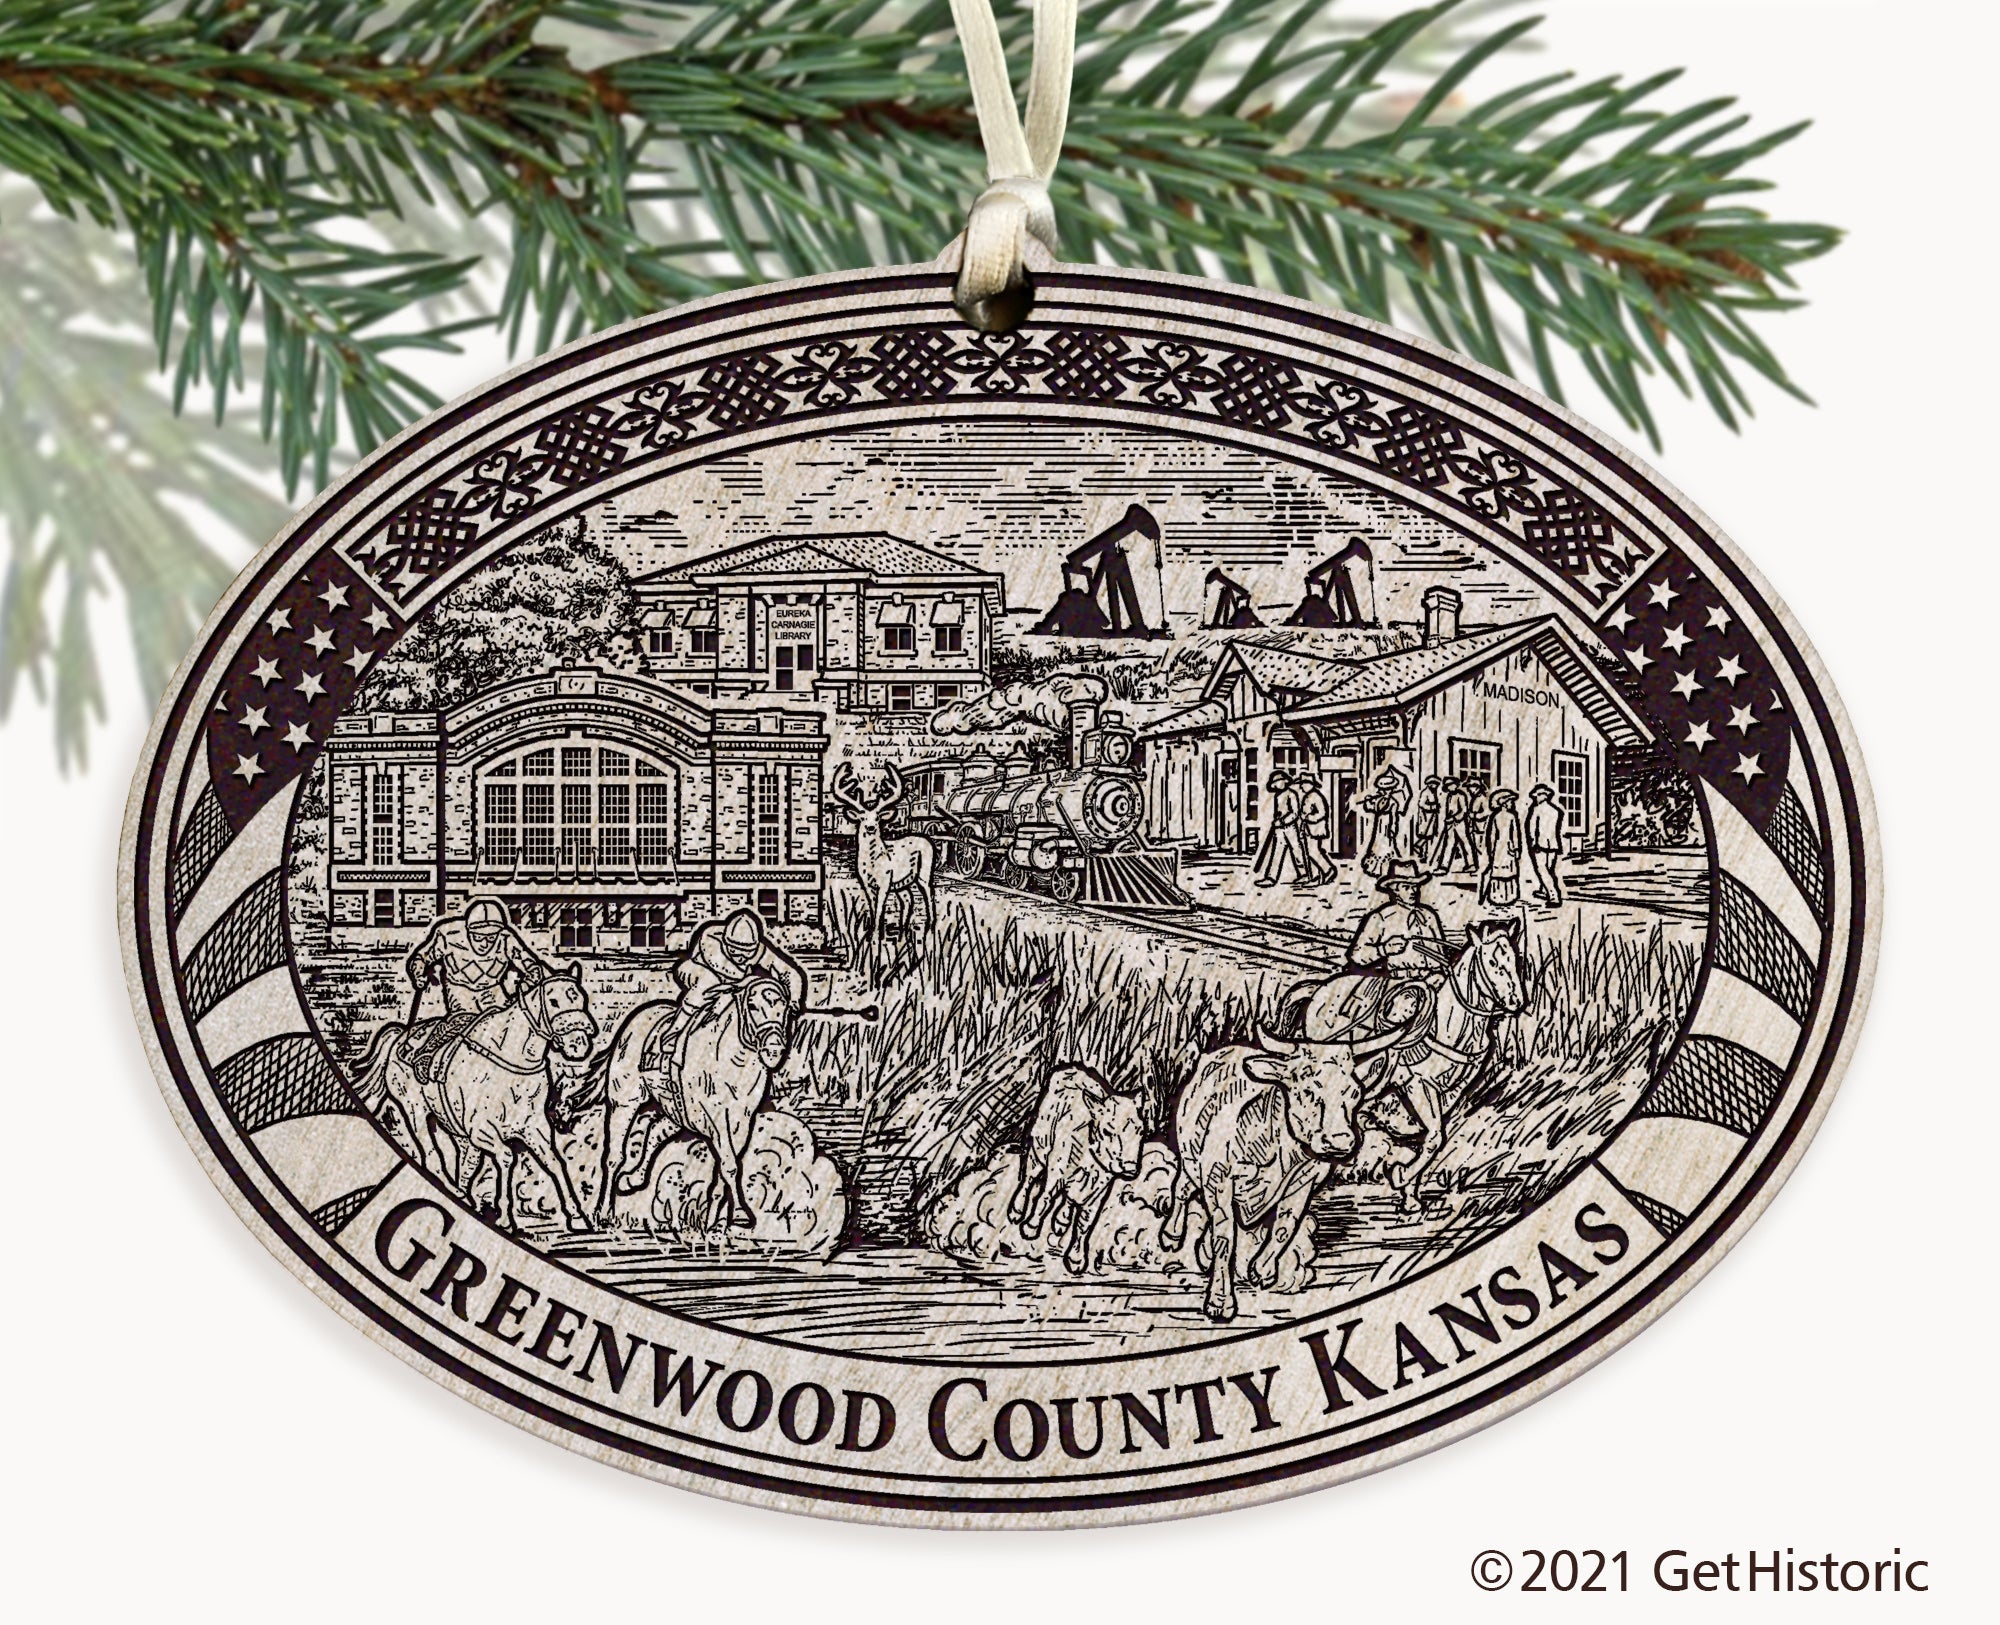 Greenwood County Kansas Engraved Ornament